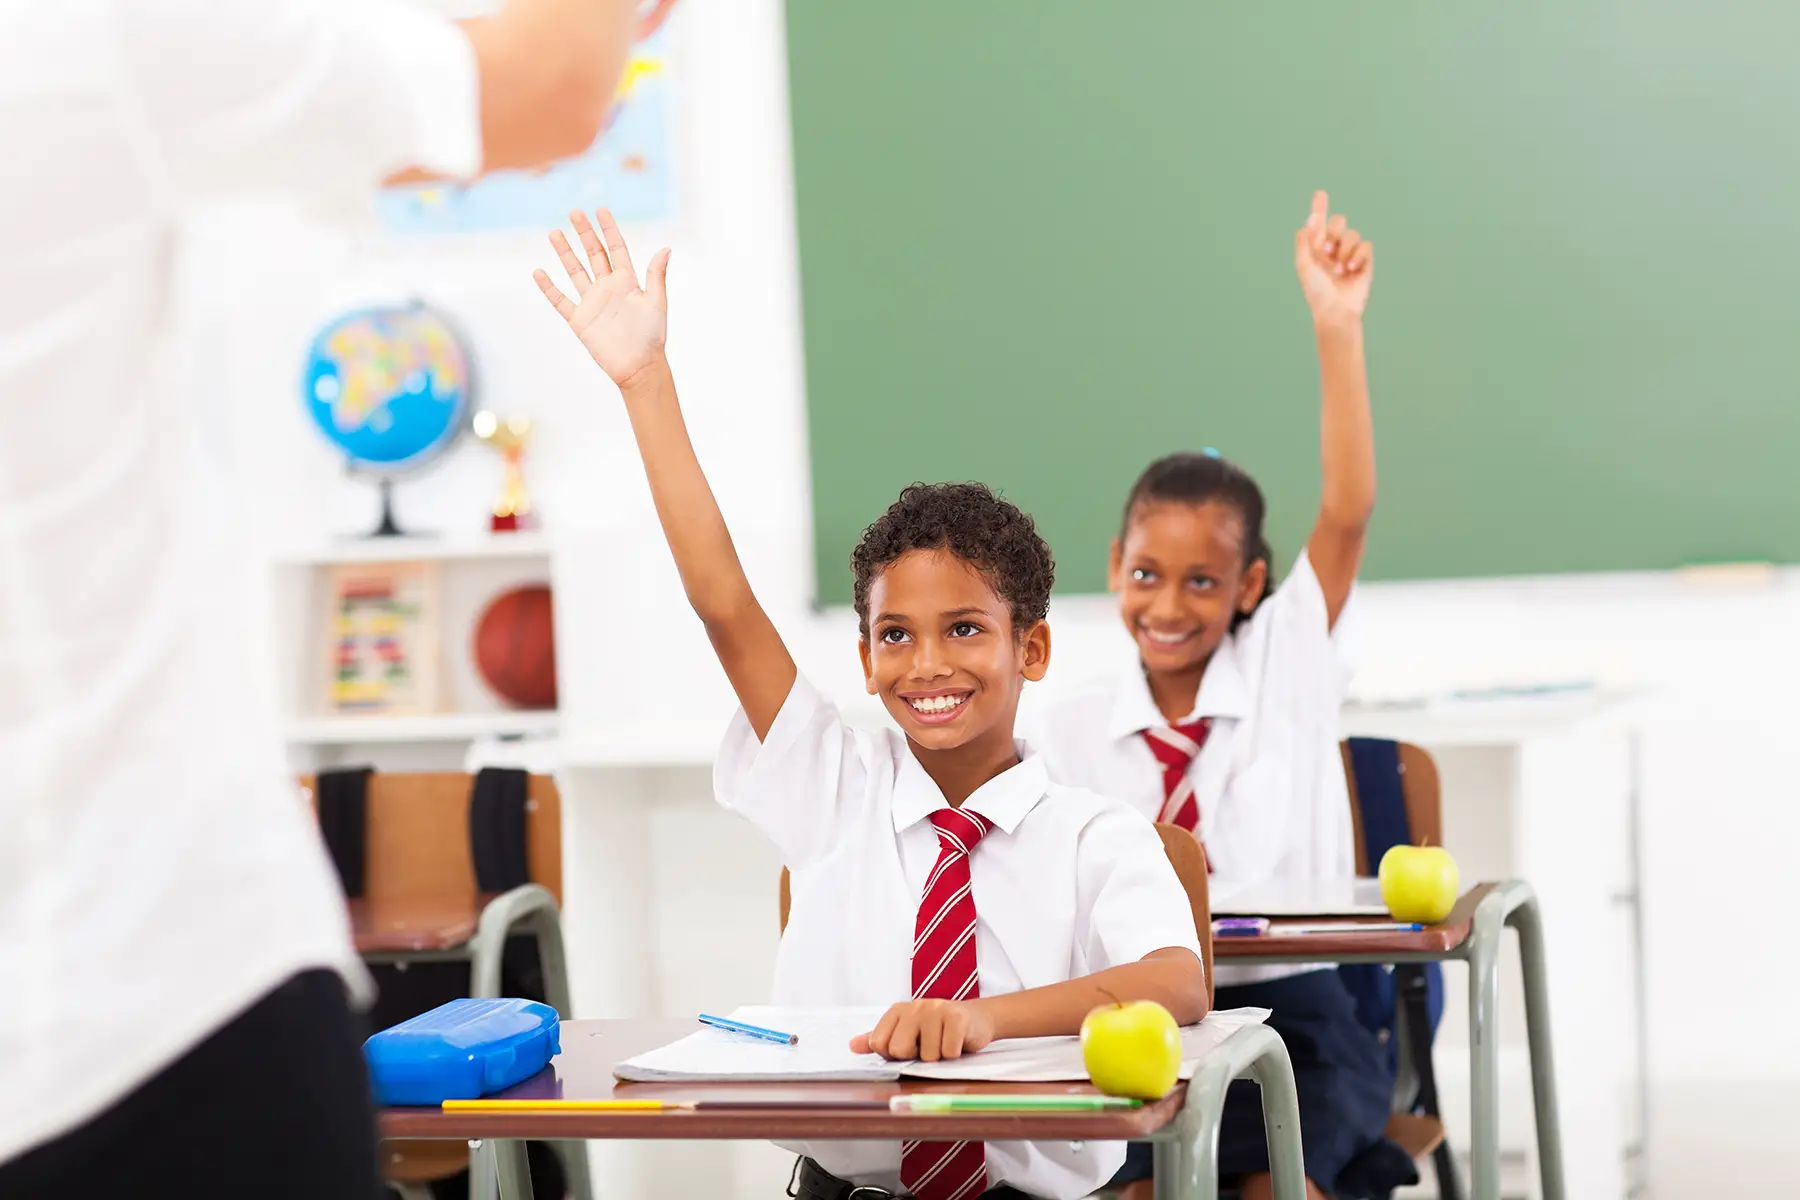 Children in uniform raising their hands for the teacher